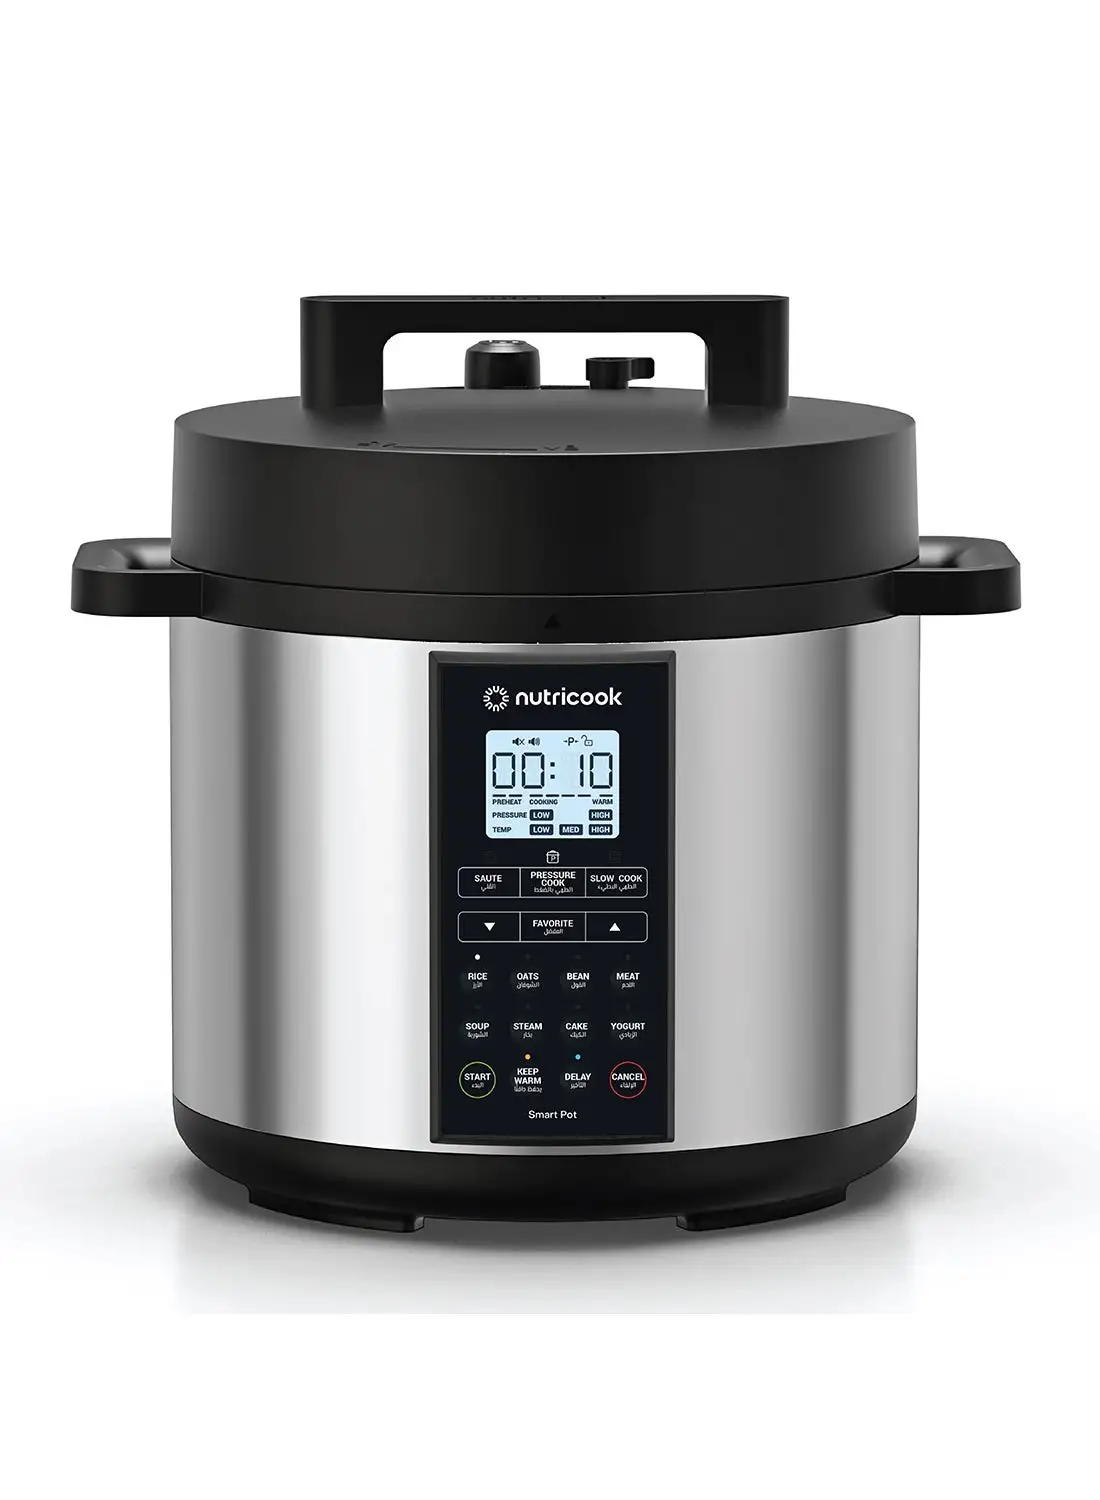 nutricook Aluminium Smart Pot 2 Prime 9 Appliances In 1 Pressure Cooker/Sauté Pot/Slow Cooker/Rice Cooker/Cake Maker/Steamer/Yogurt Maker And Food Warmer 6 L 1000 W SP204P Silver